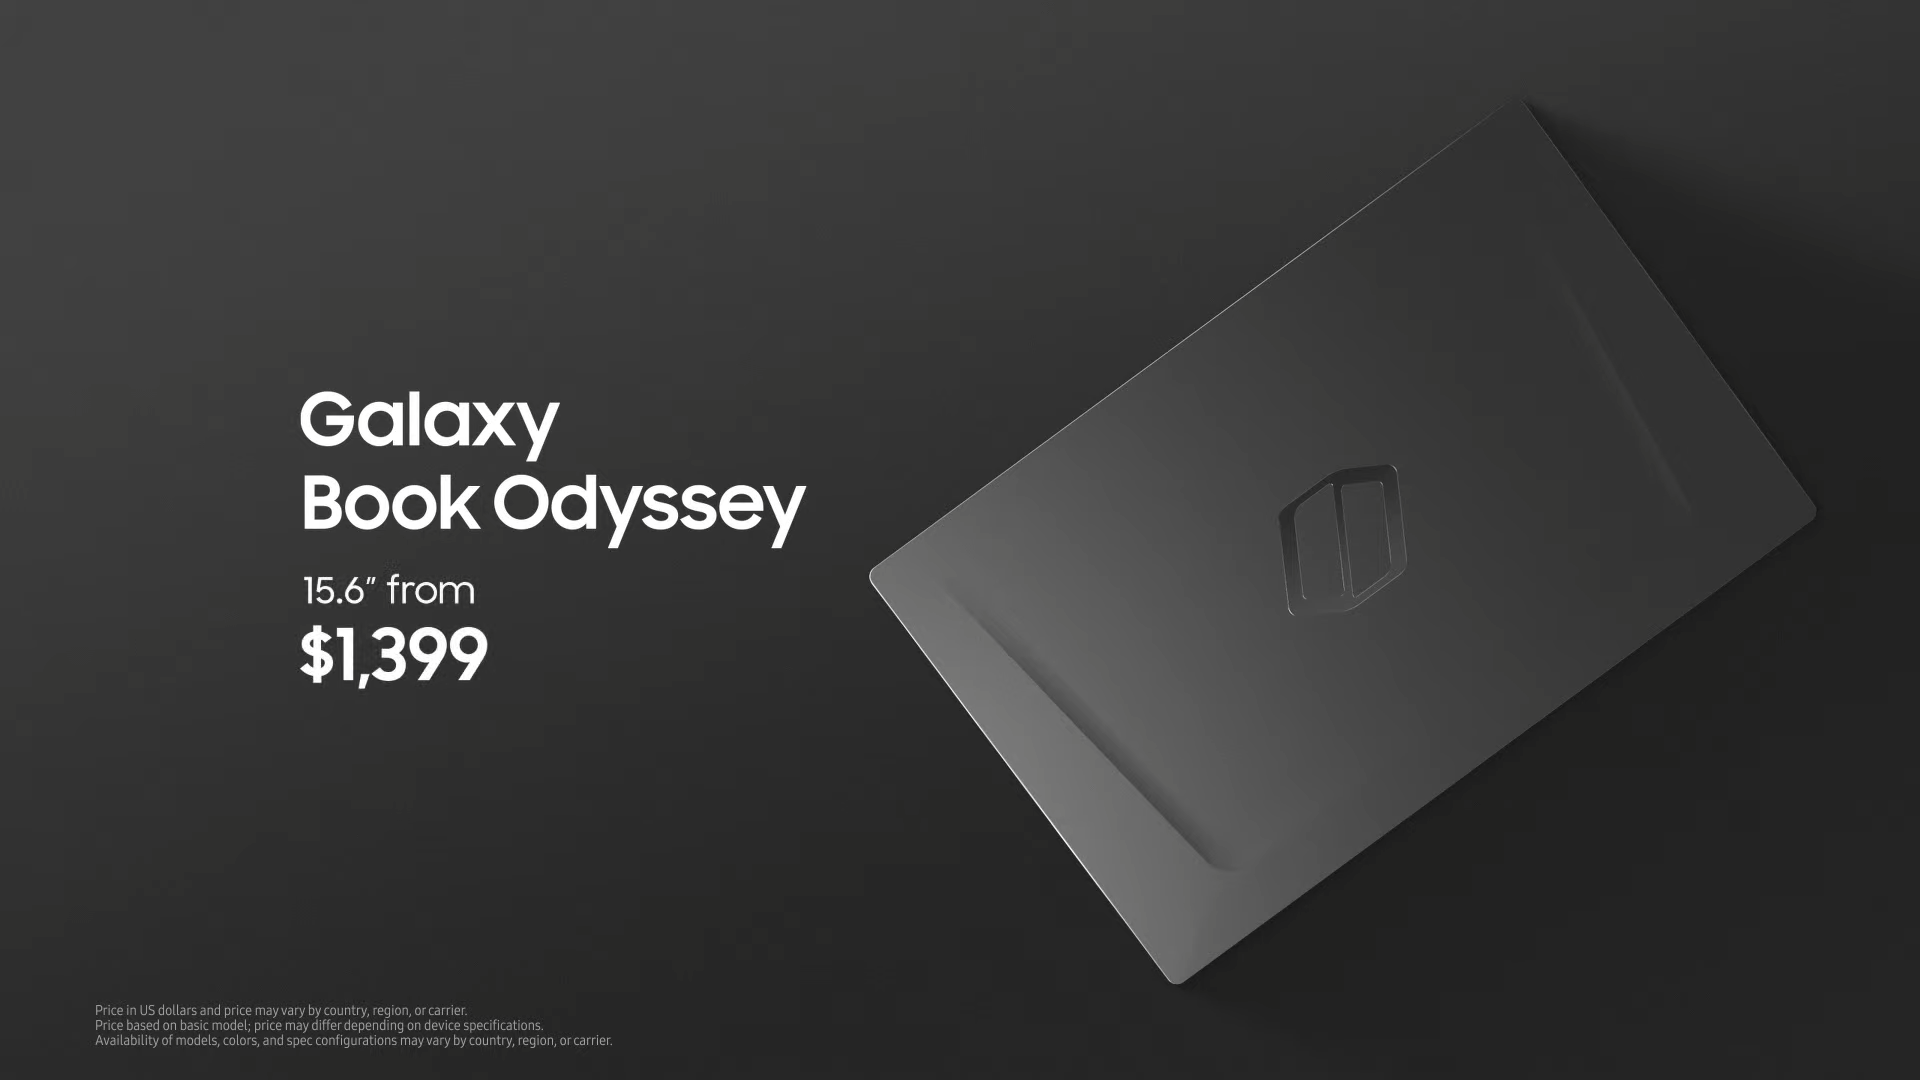 Samsung Galaxy Book Odyssey Price